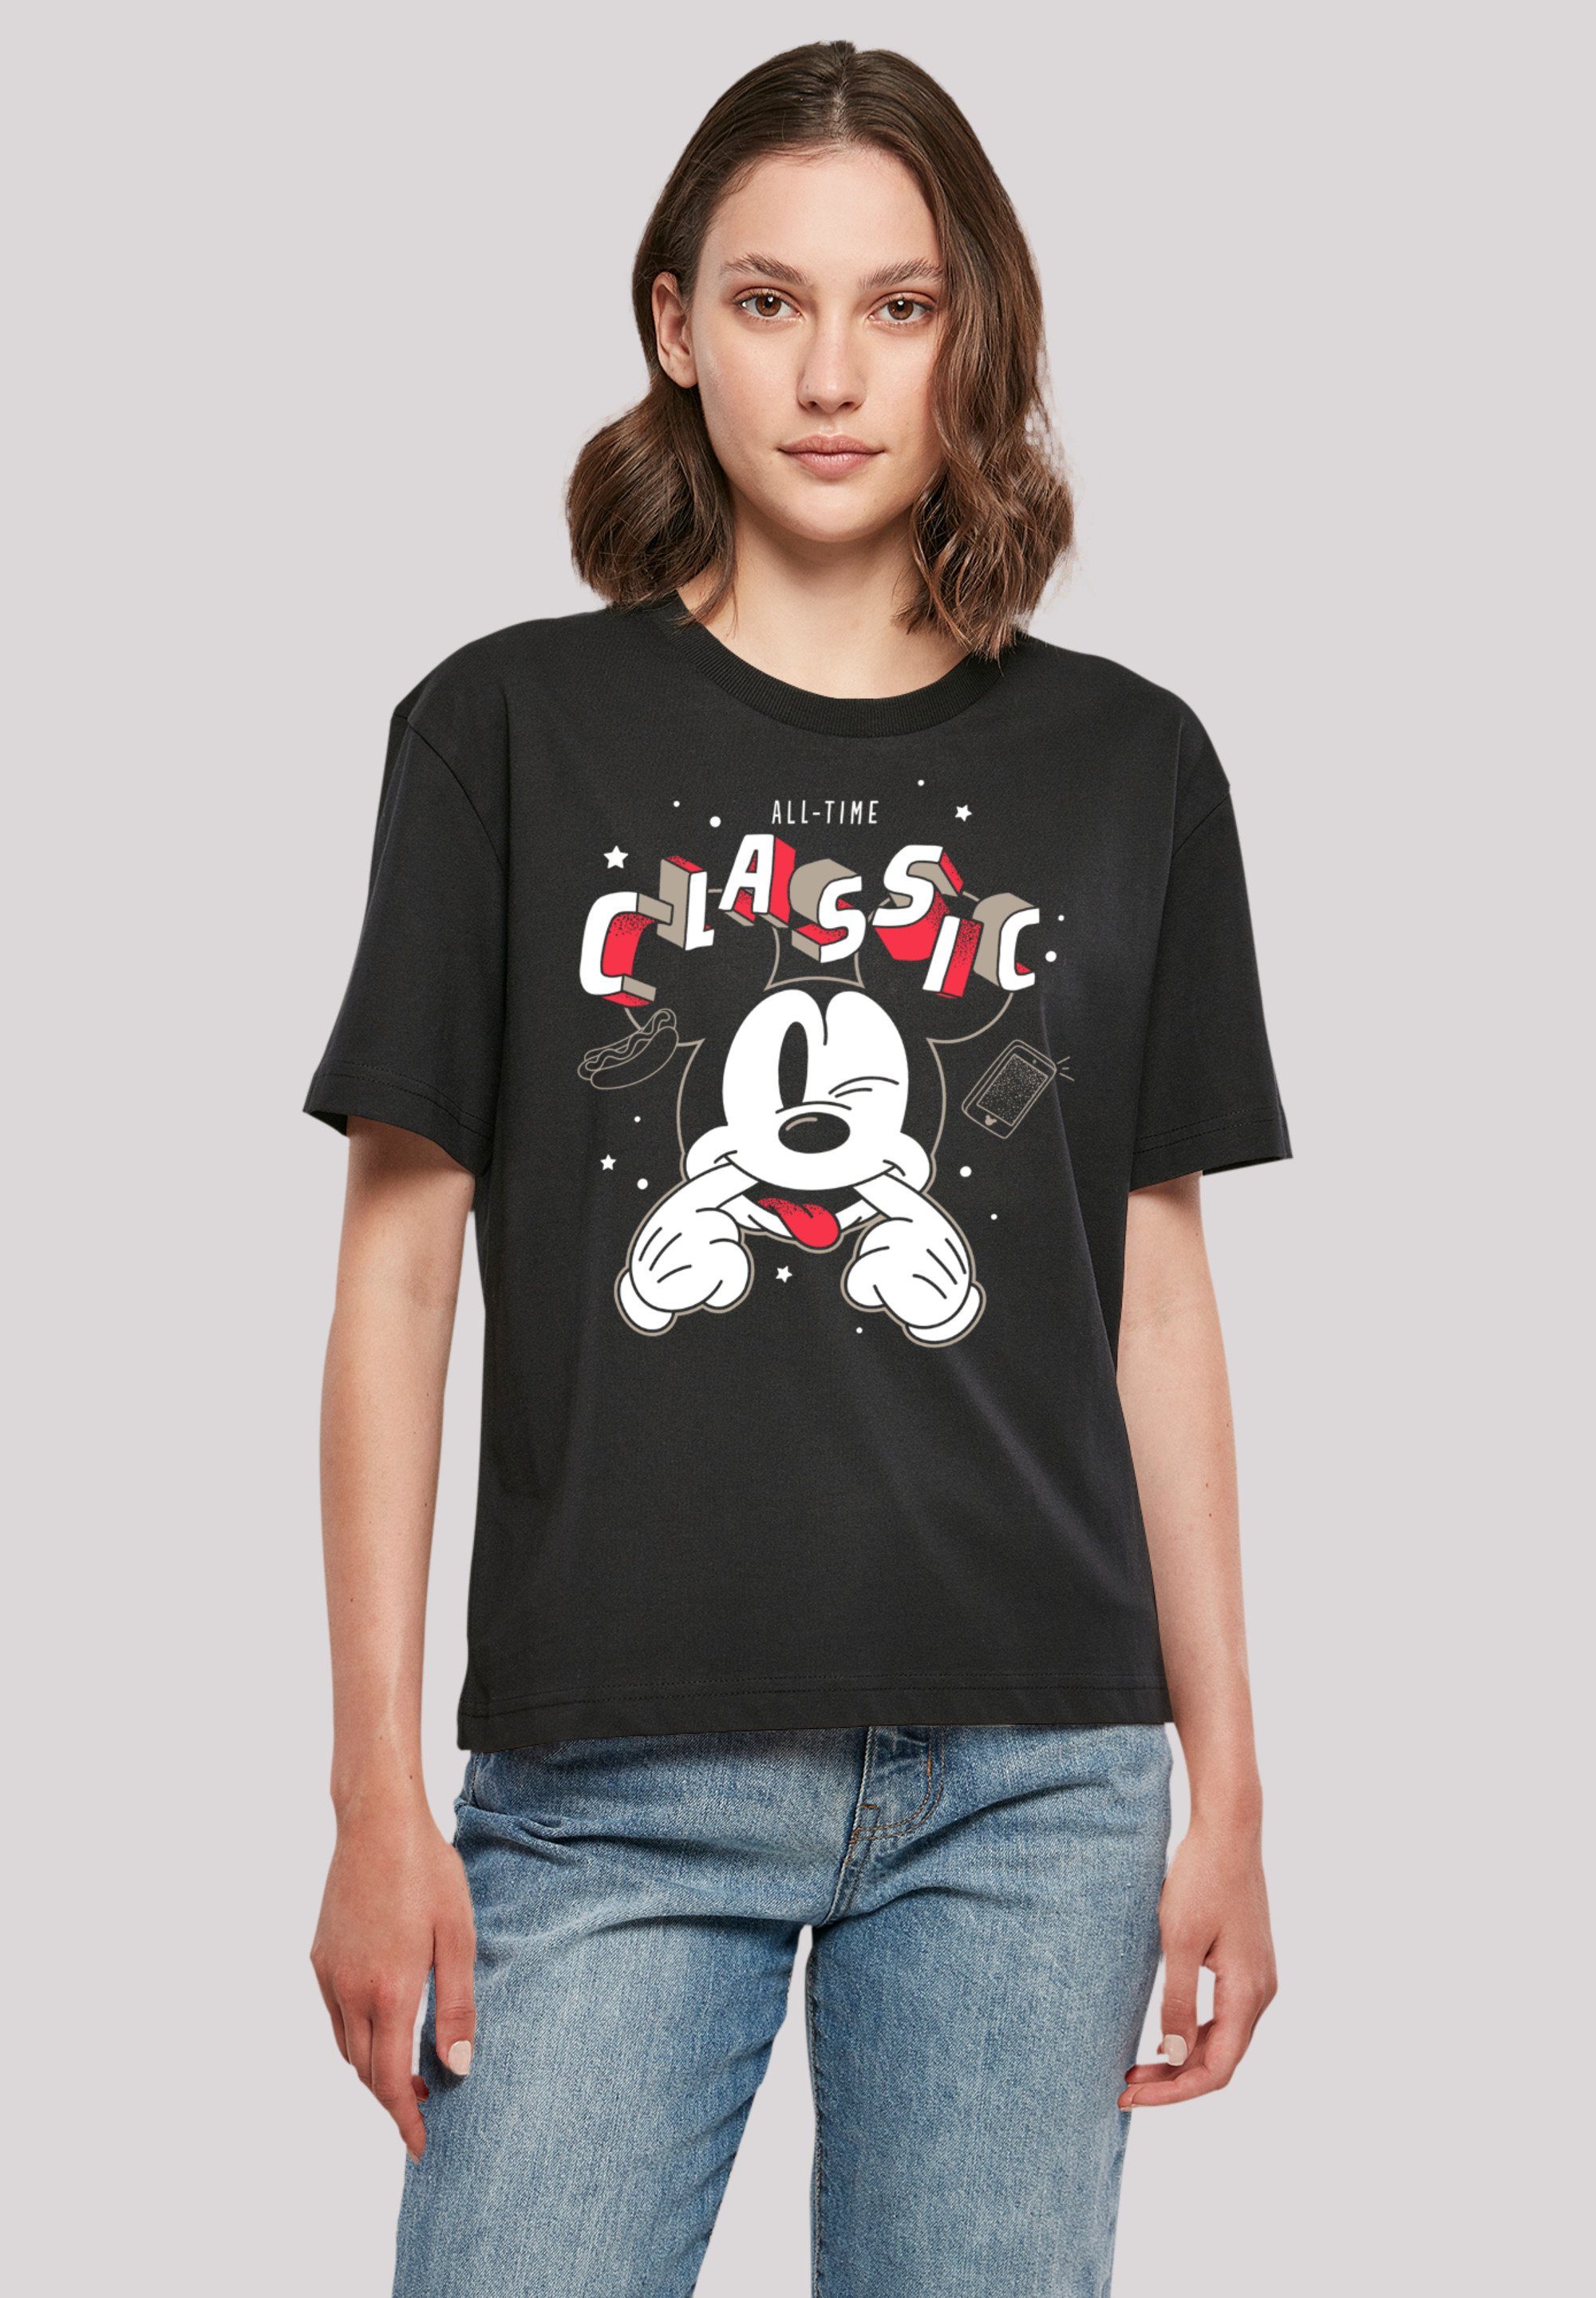 All Maus Disney Premium T-Shirt vielseitig und Time Classic Qualität, Komfortabel F4NT4STIC Micky kombinierbar